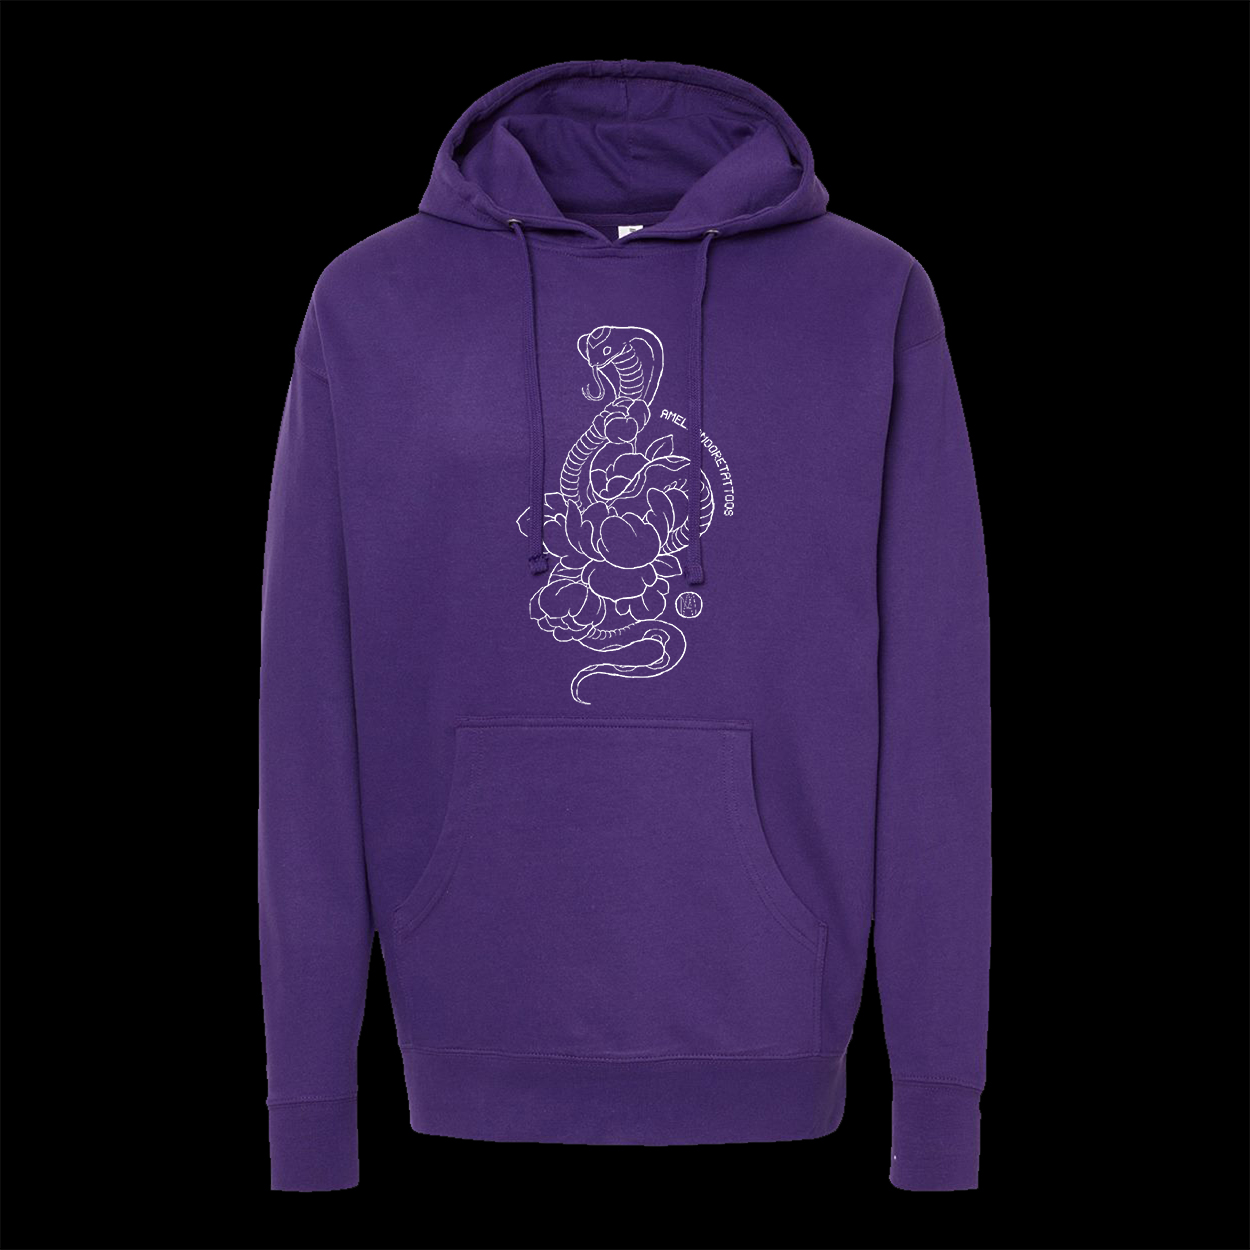 Amelia Moore Tattoo ekens purple hoodie